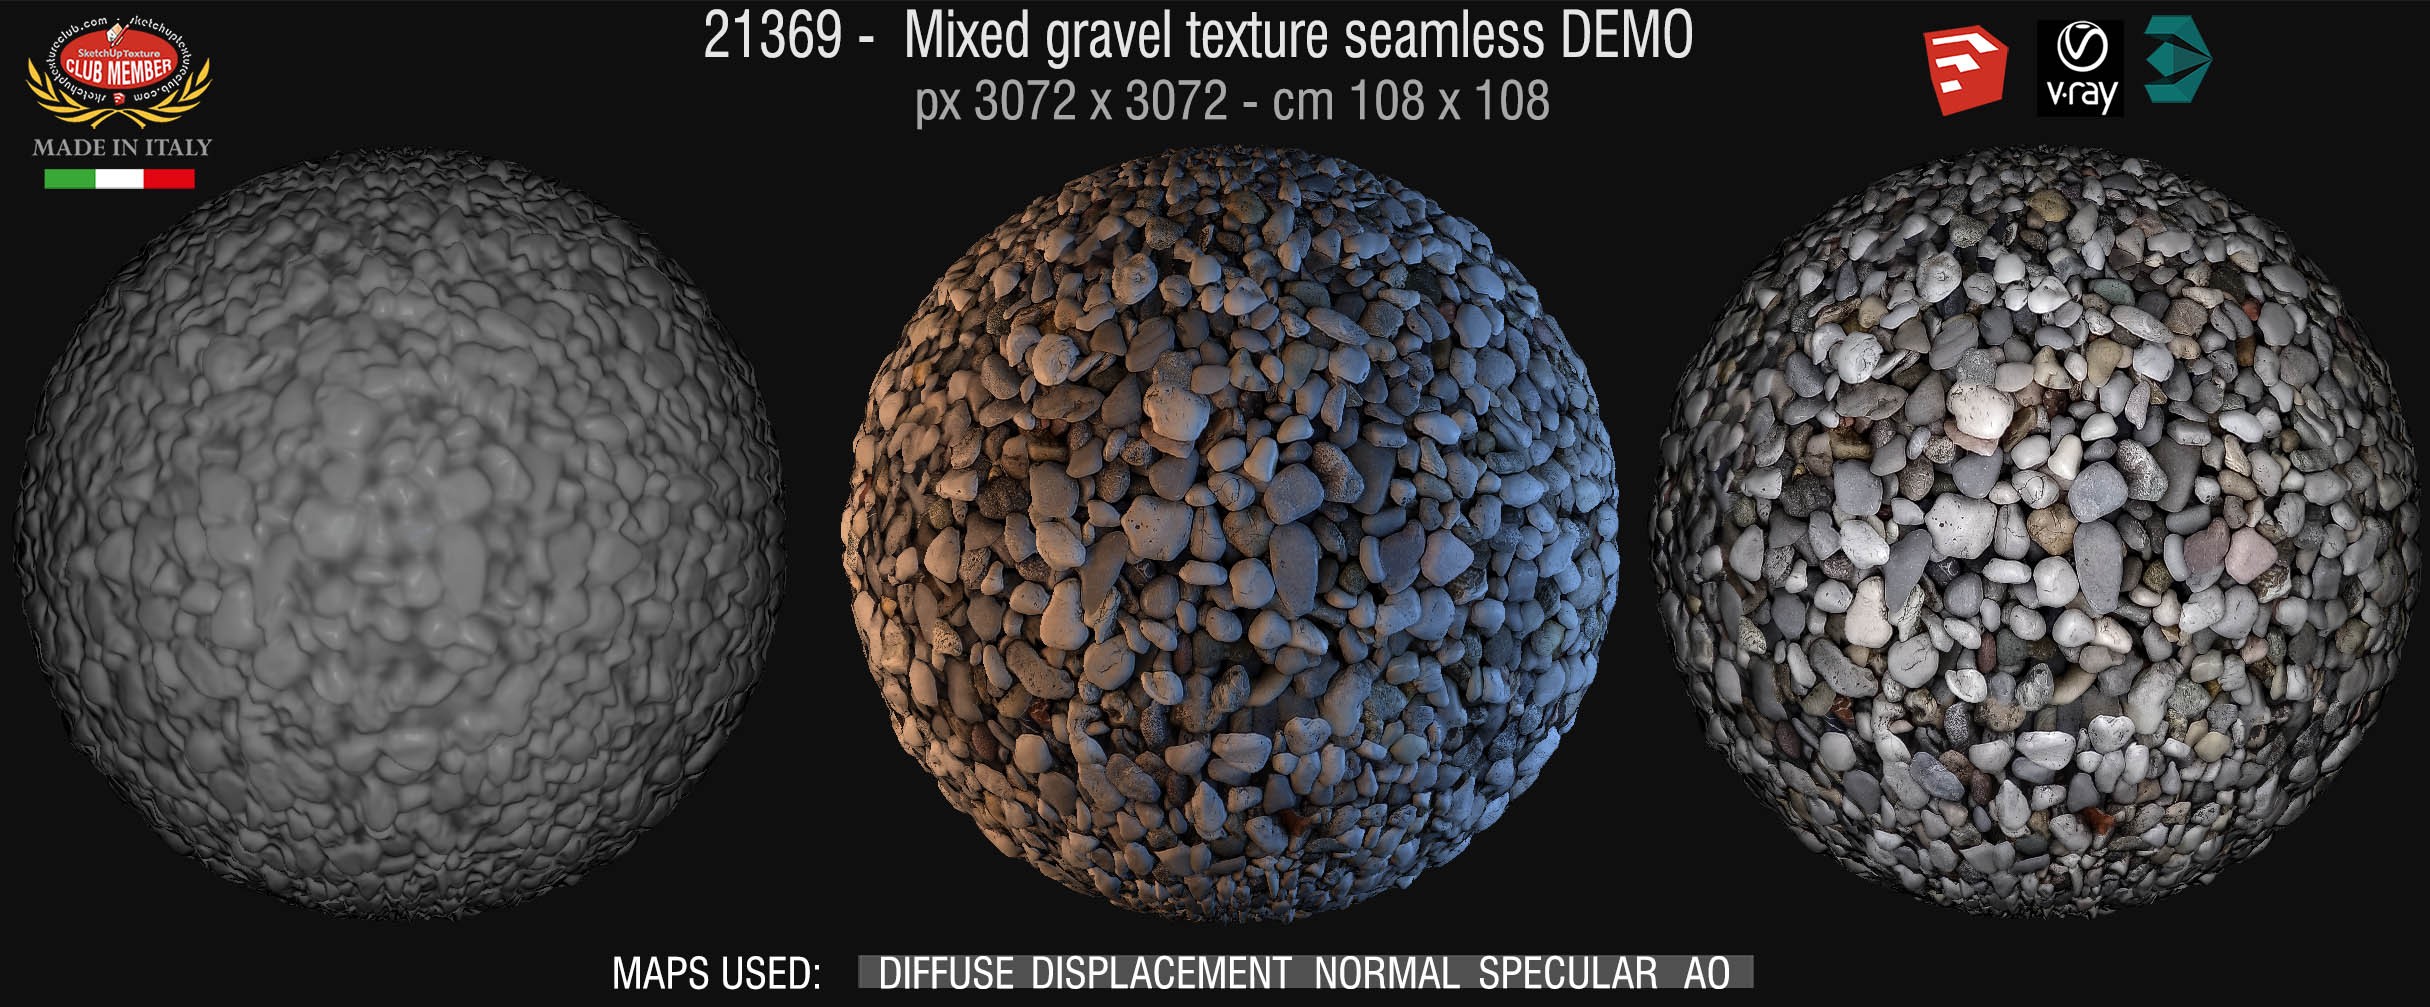 21369 mixed gravel texture seamless + maps